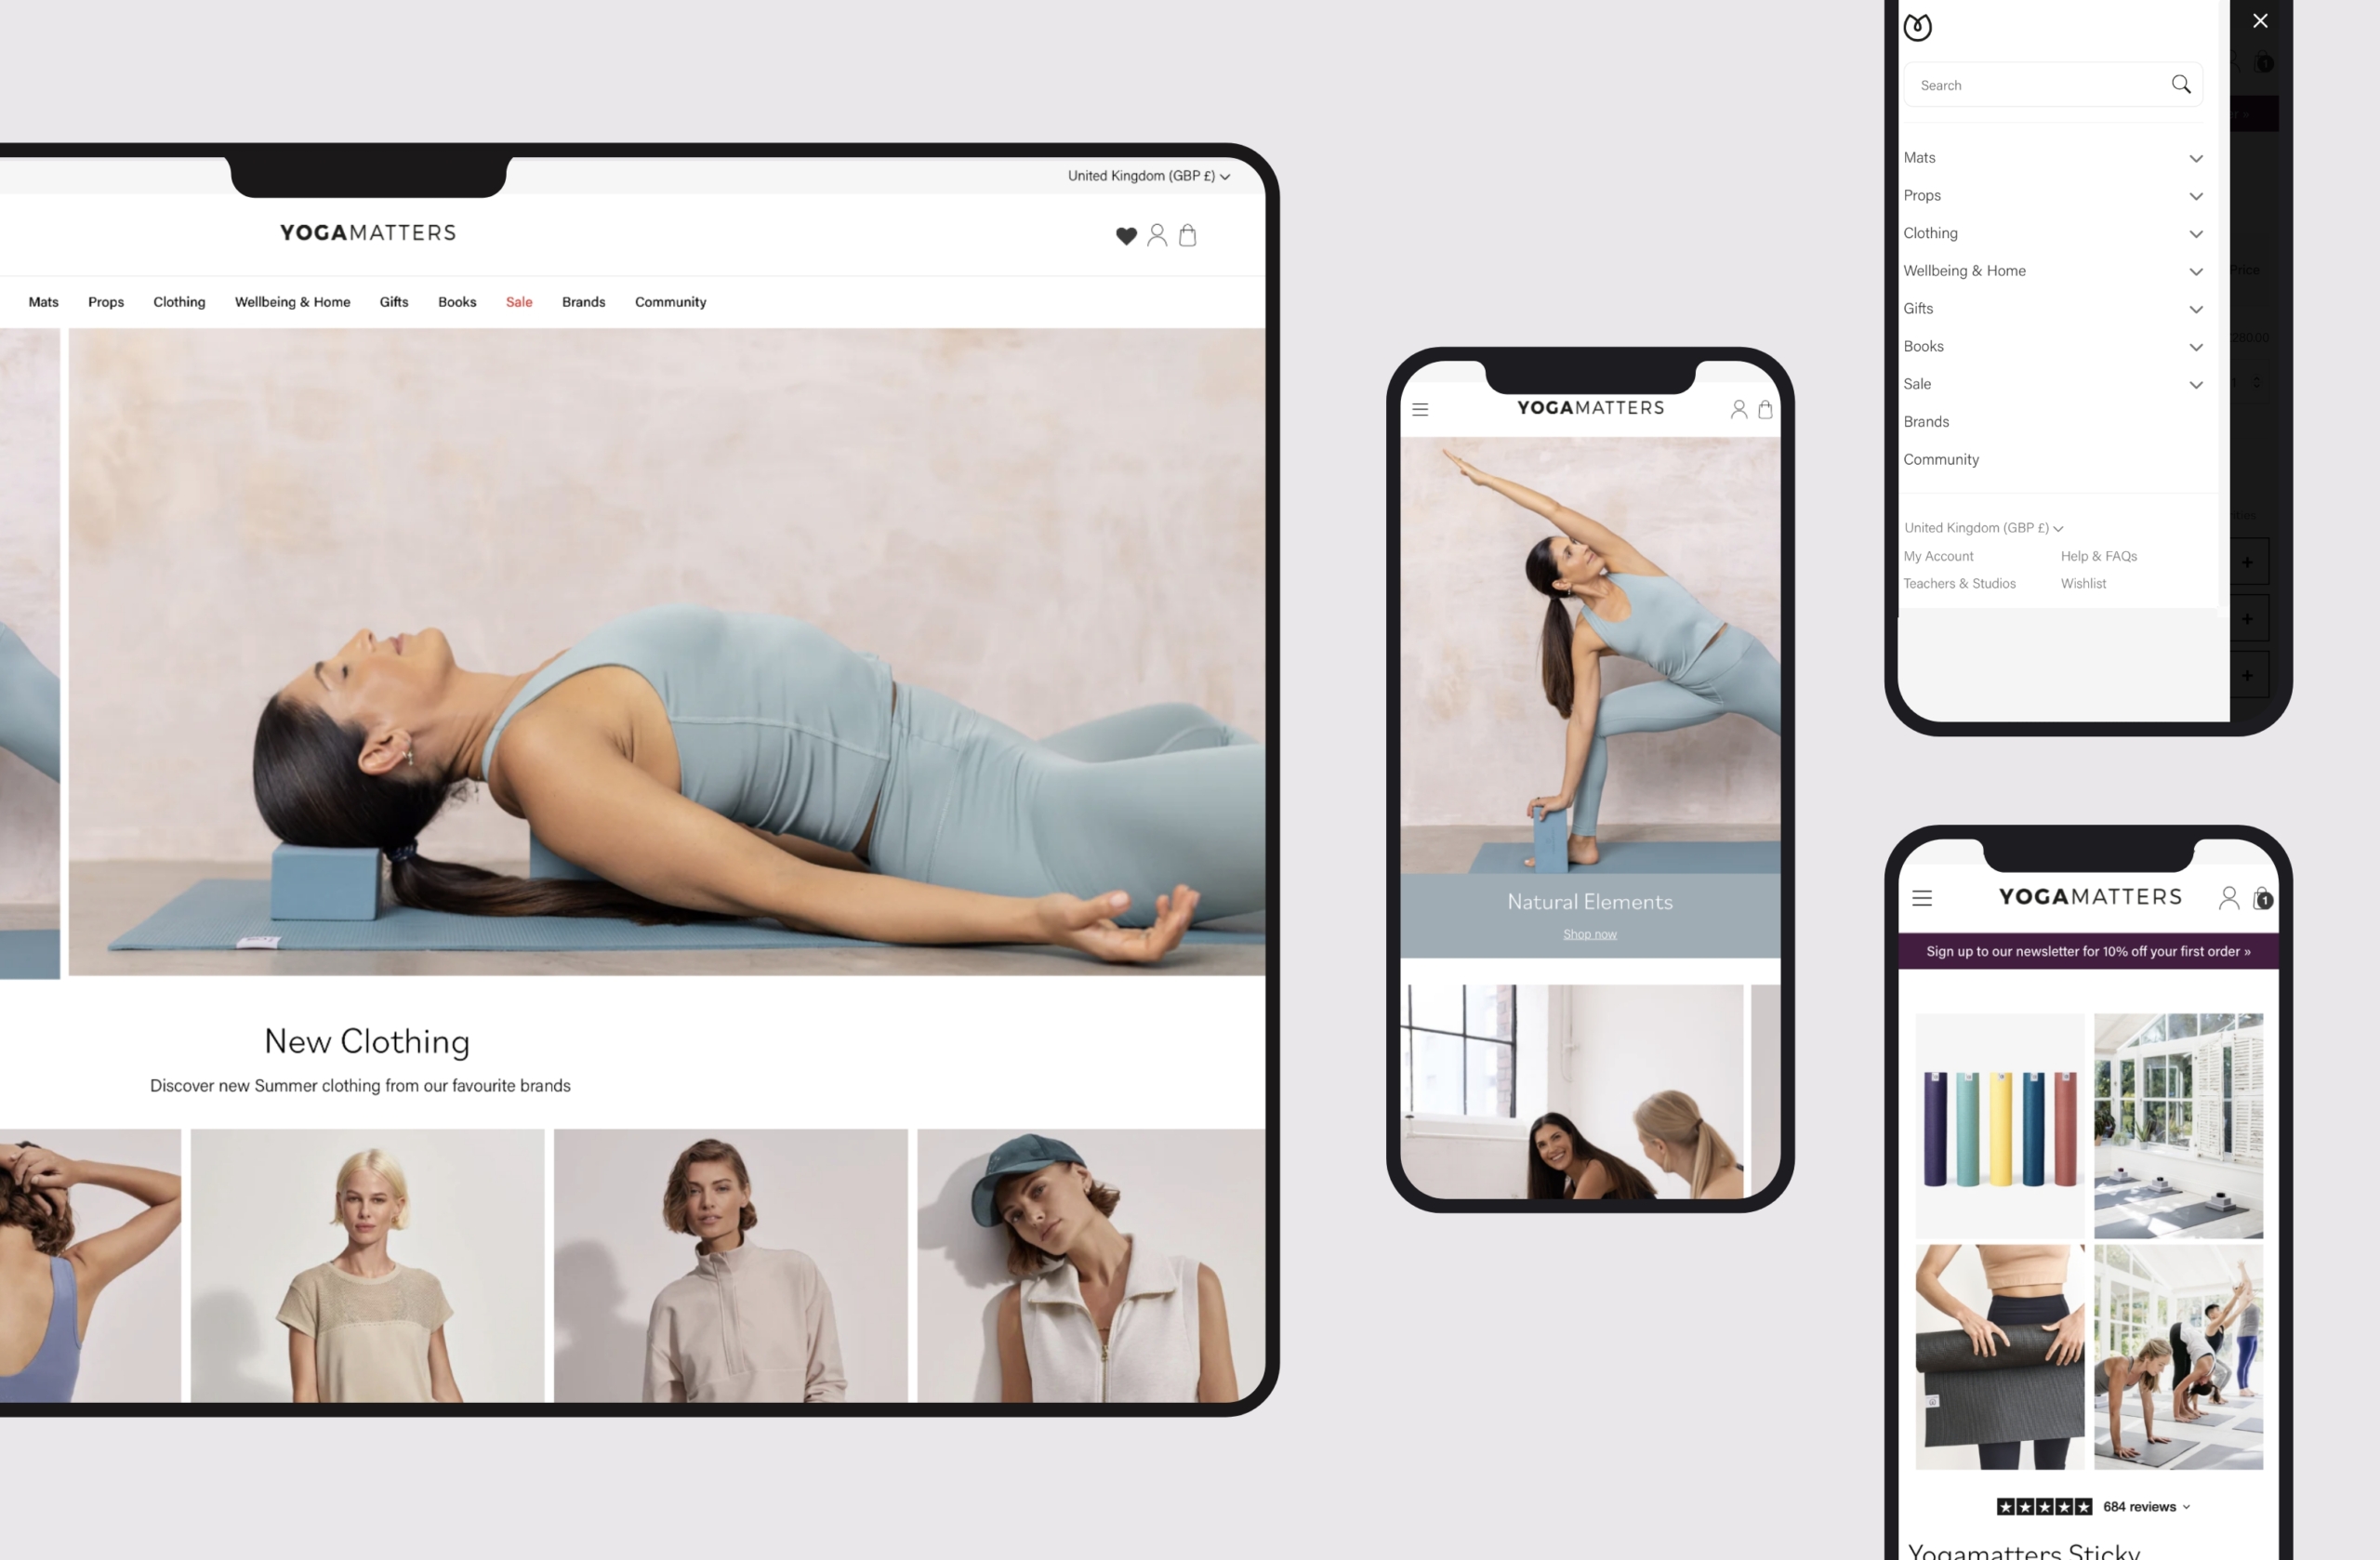 Yogamatters website on multiple screens